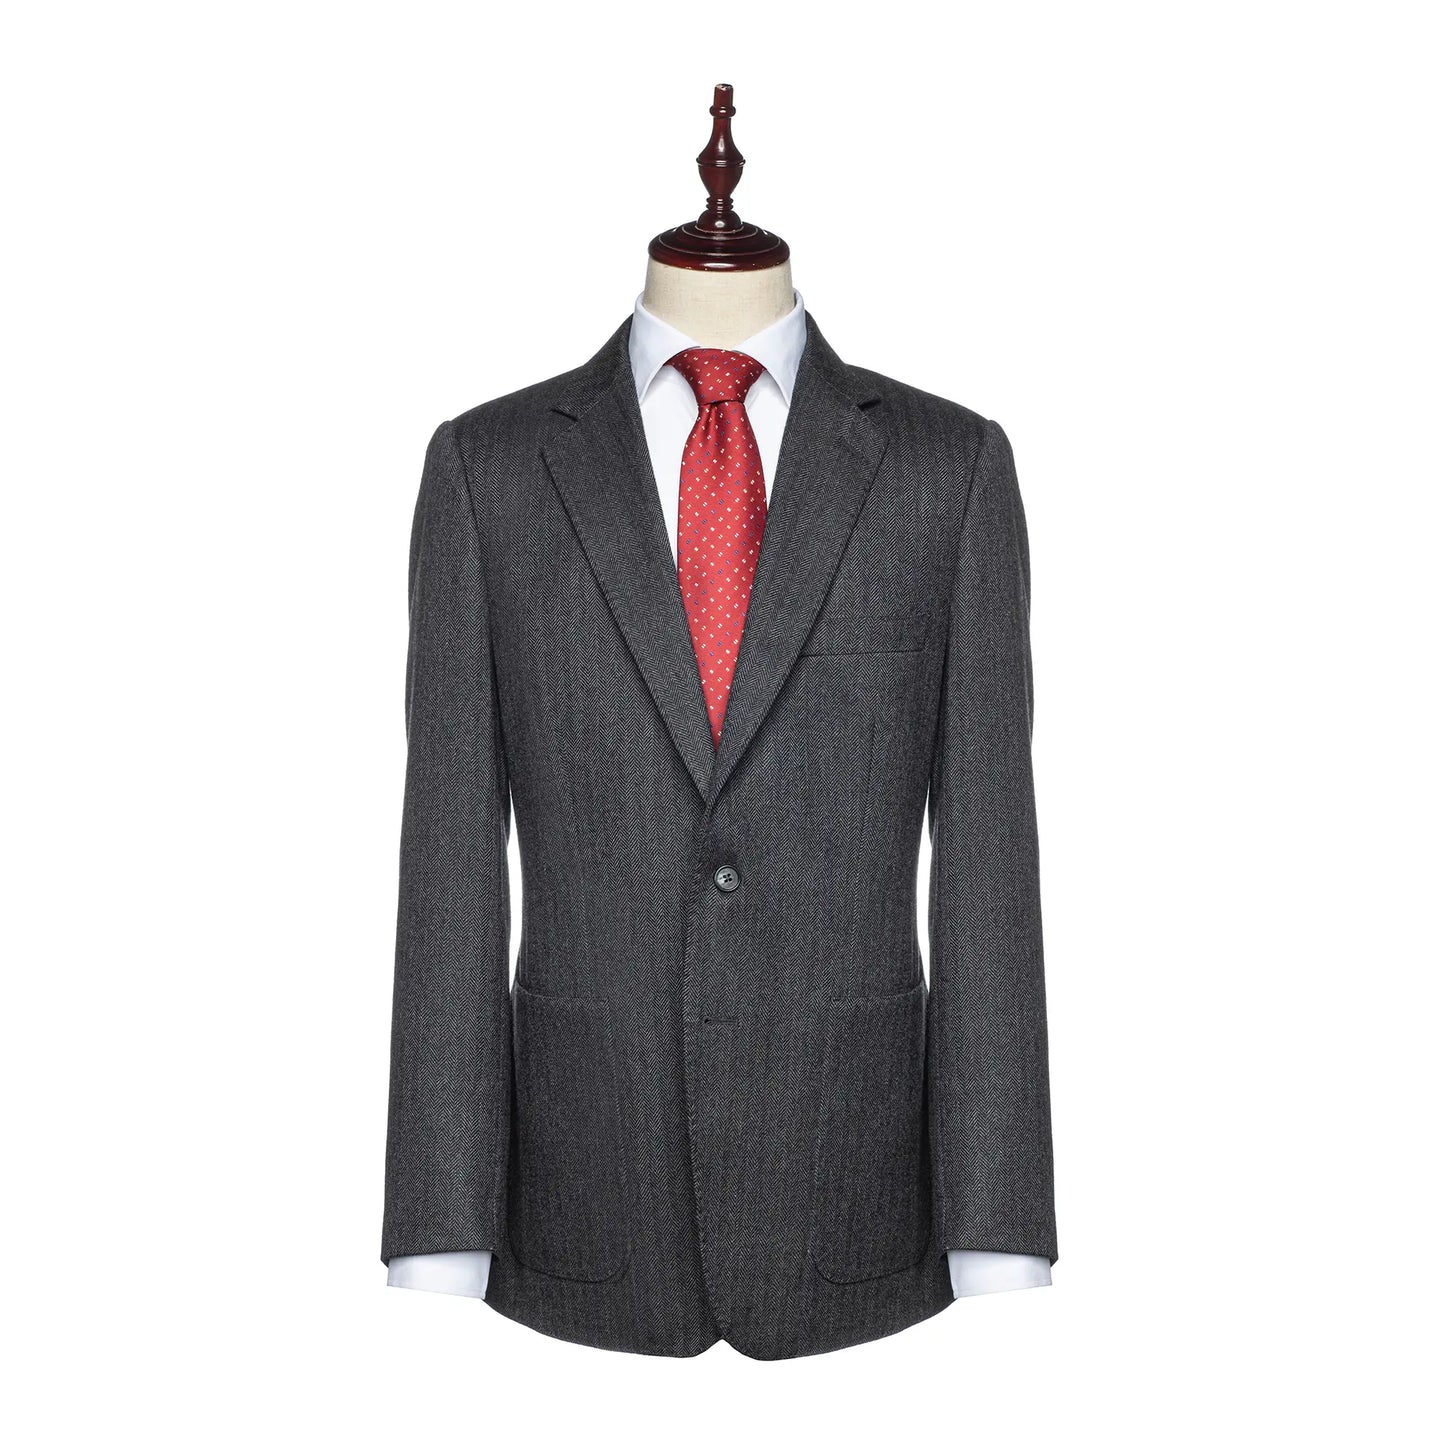 Grey Herringbone Jacket - Larimars Clothing Men's Formal and casual wear shirts